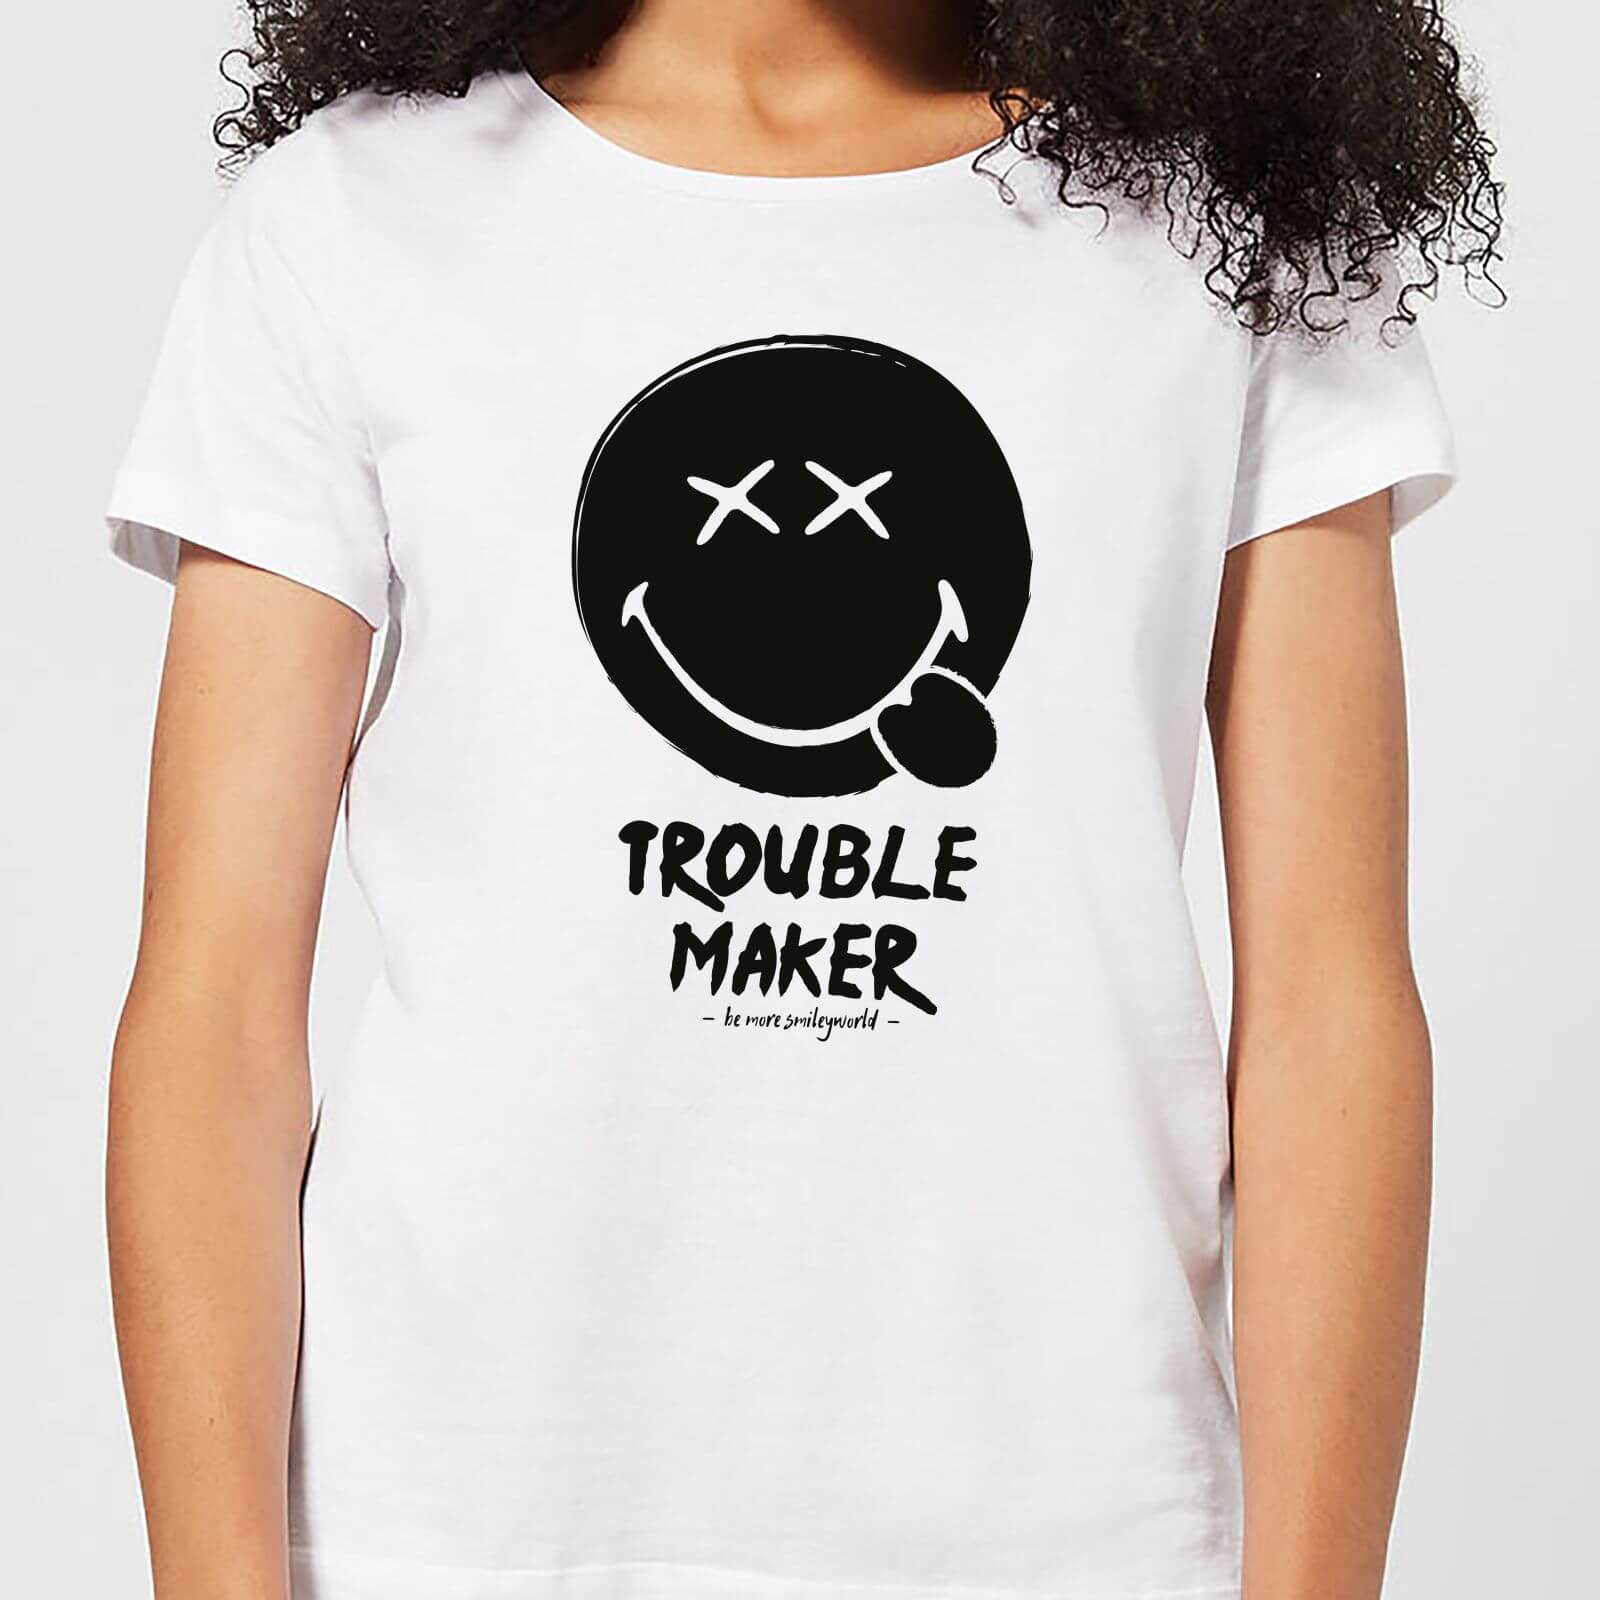 Trouble Maker Women's T-Shirt - White - S - White